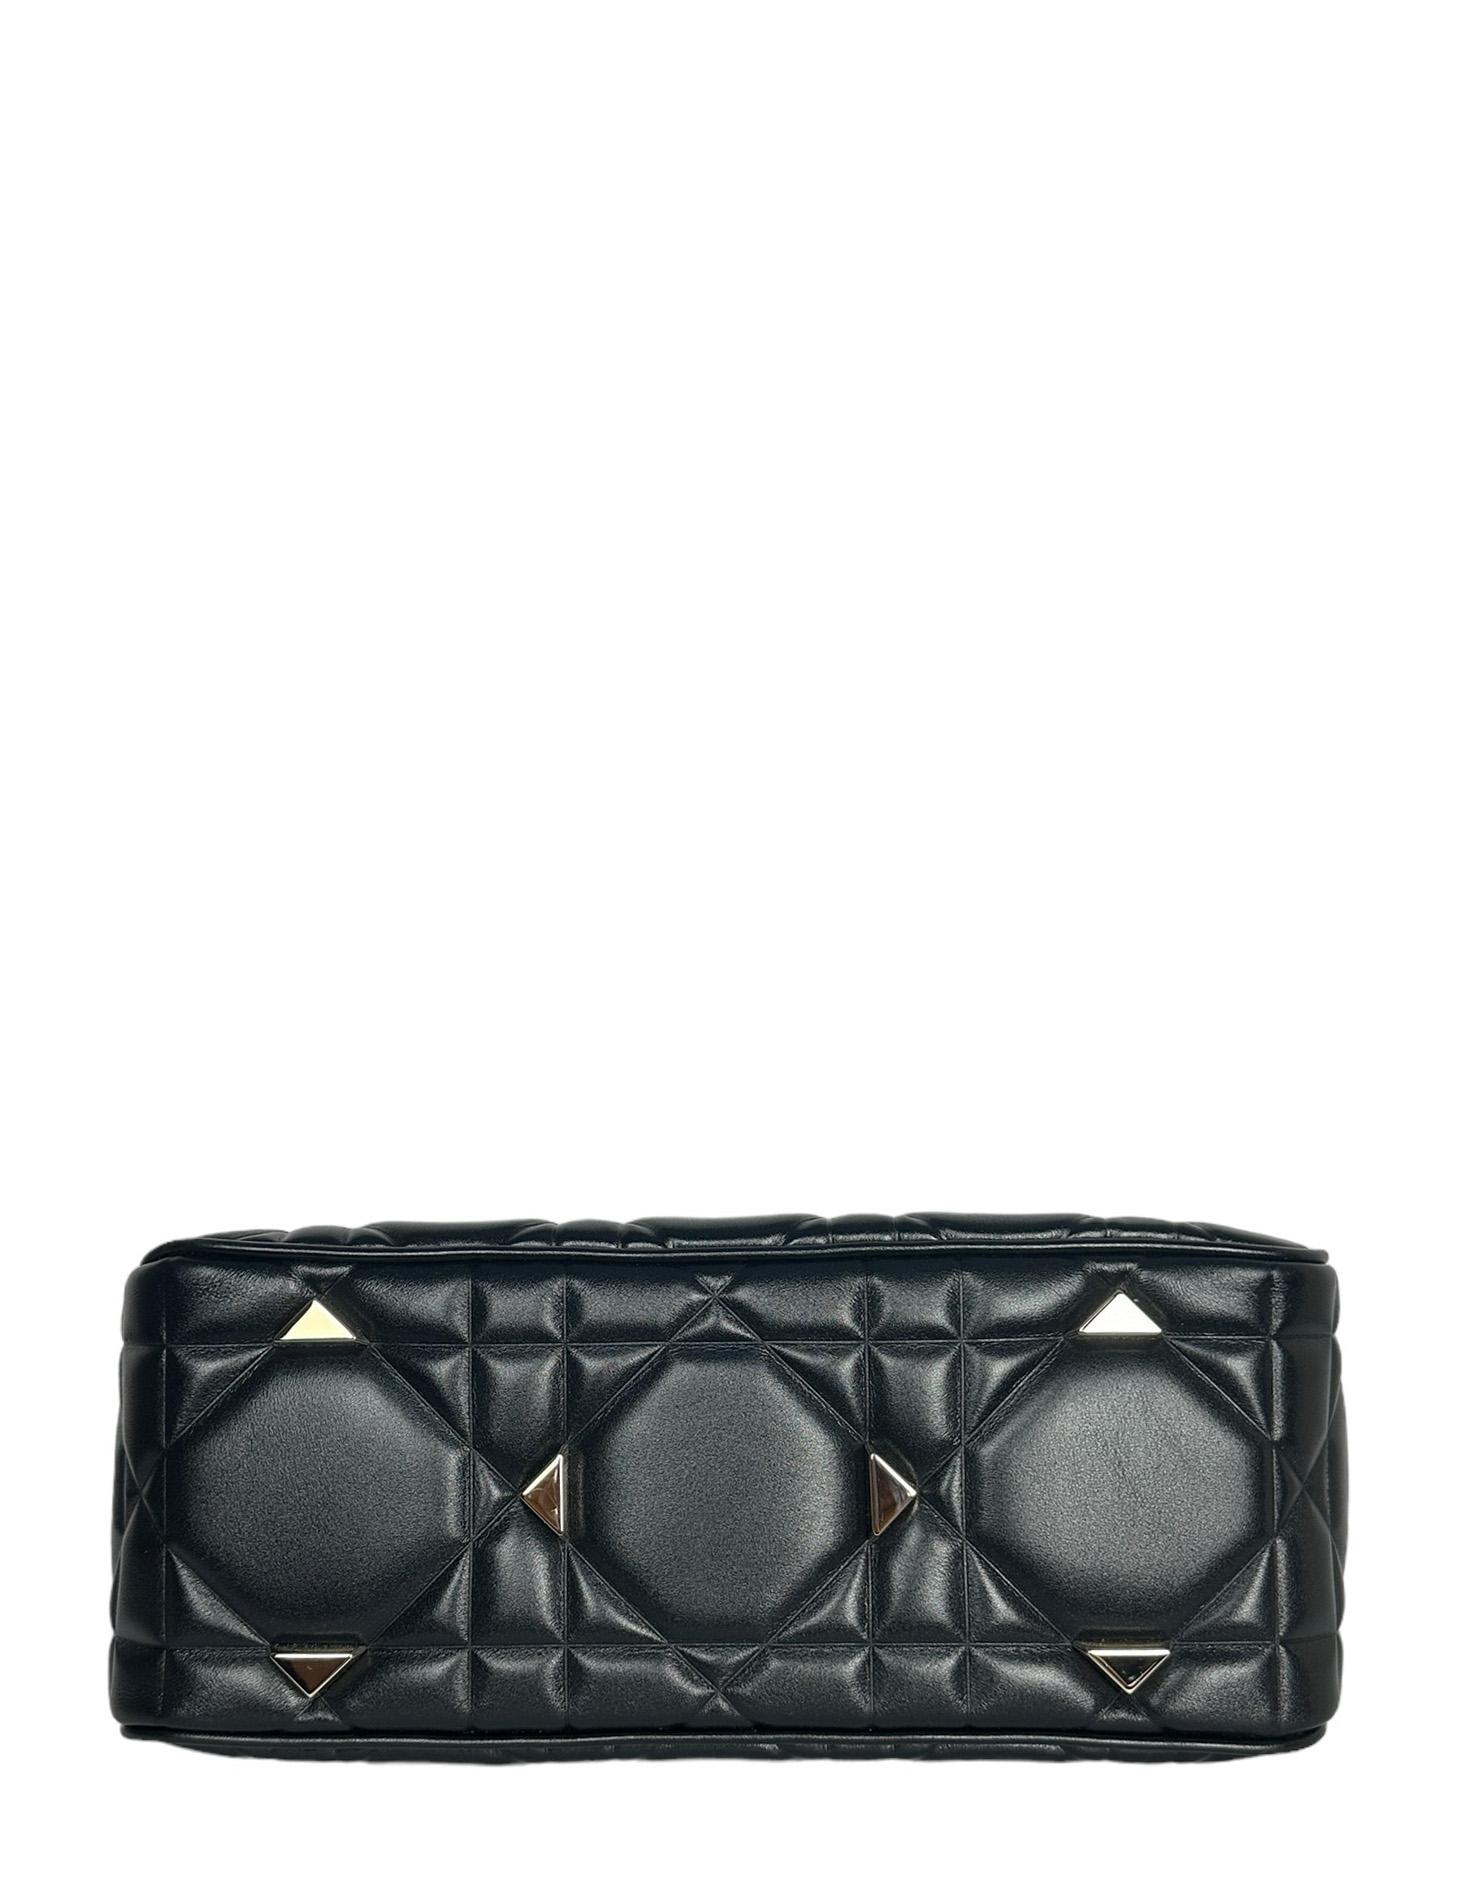 Christian Dior Cannage Schwarze gesteppte The Lady 95.22 Tasche aus Leder rt. $7200 im Angebot 2